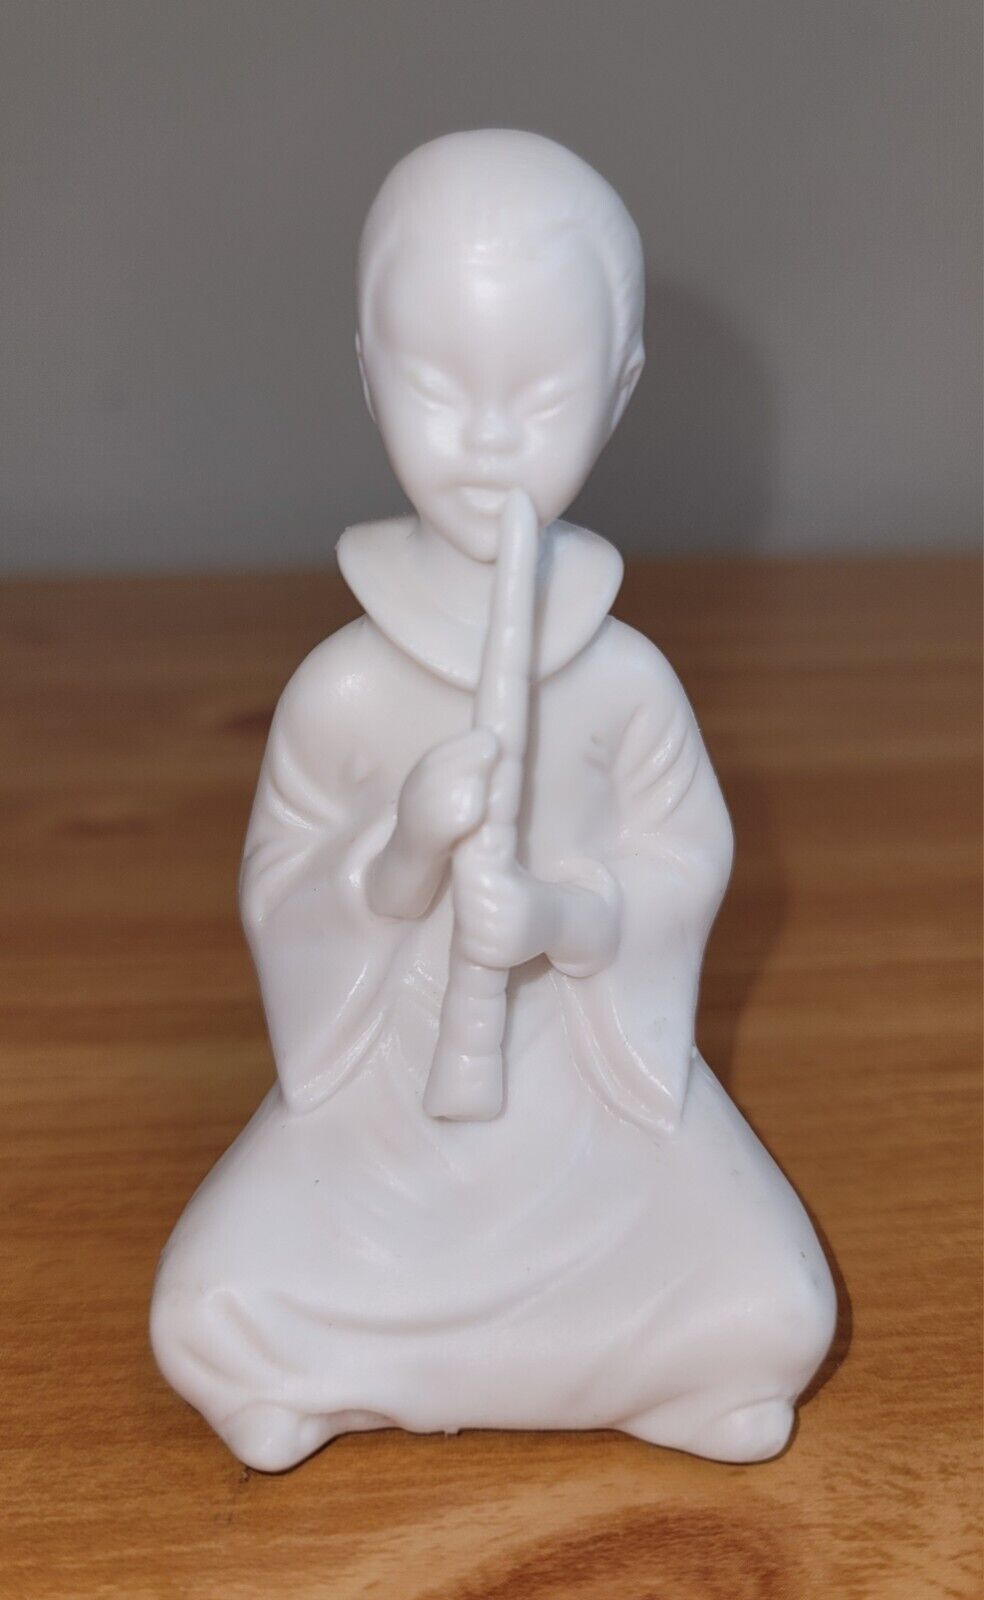 Small White Ceramic Figurine Of Japanese Boy Playing Instrument